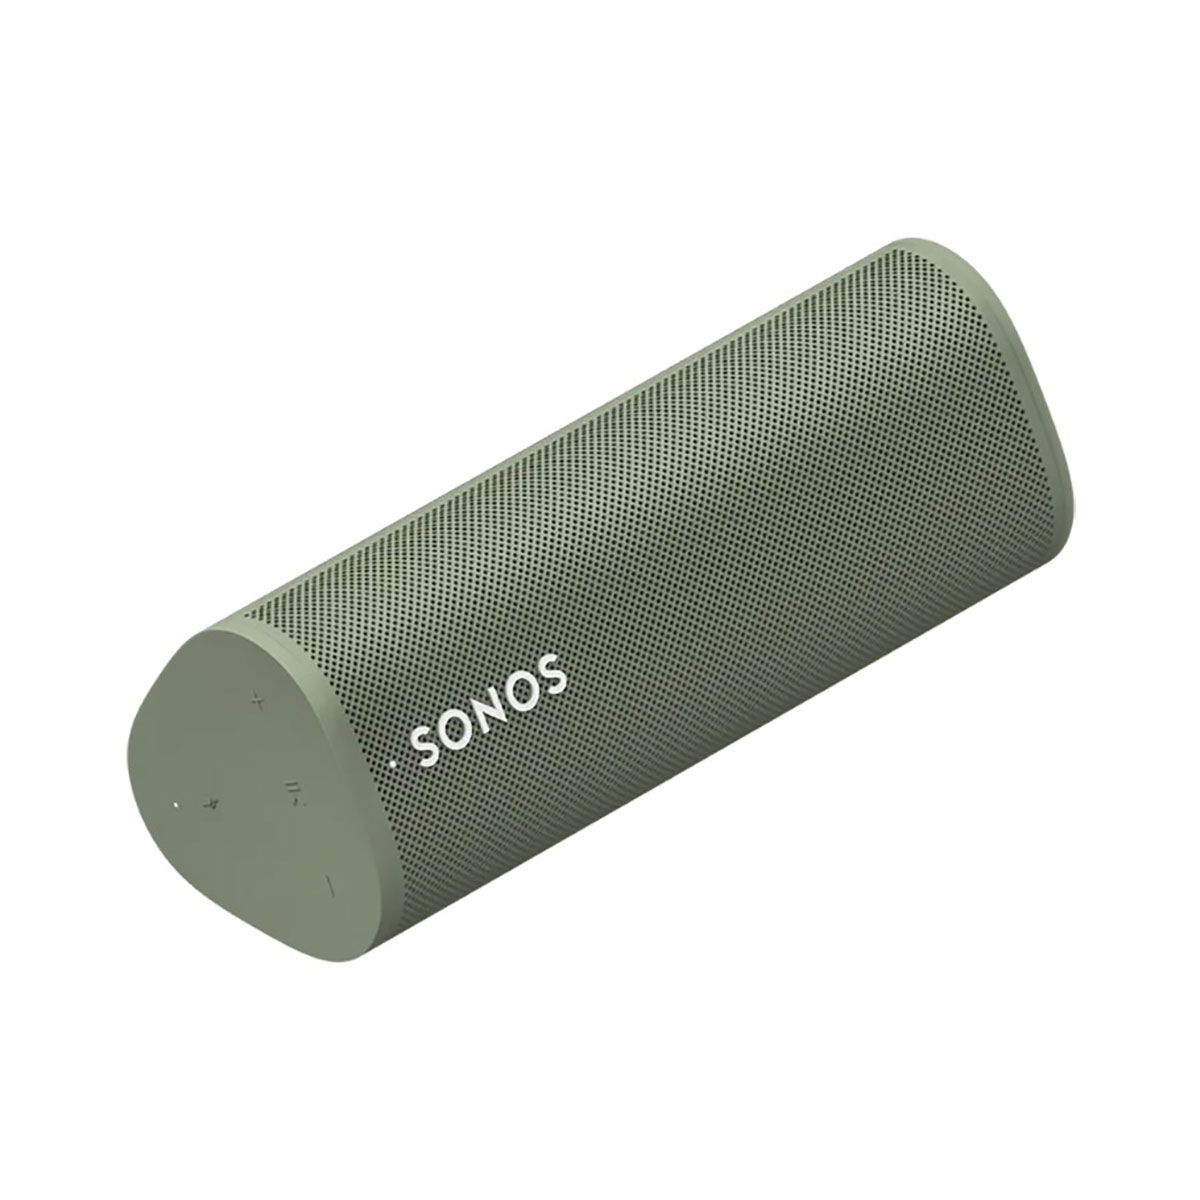 Sonos - Roam, Portable Smart Speaker, Wi-Fi, Bluetooth, Green